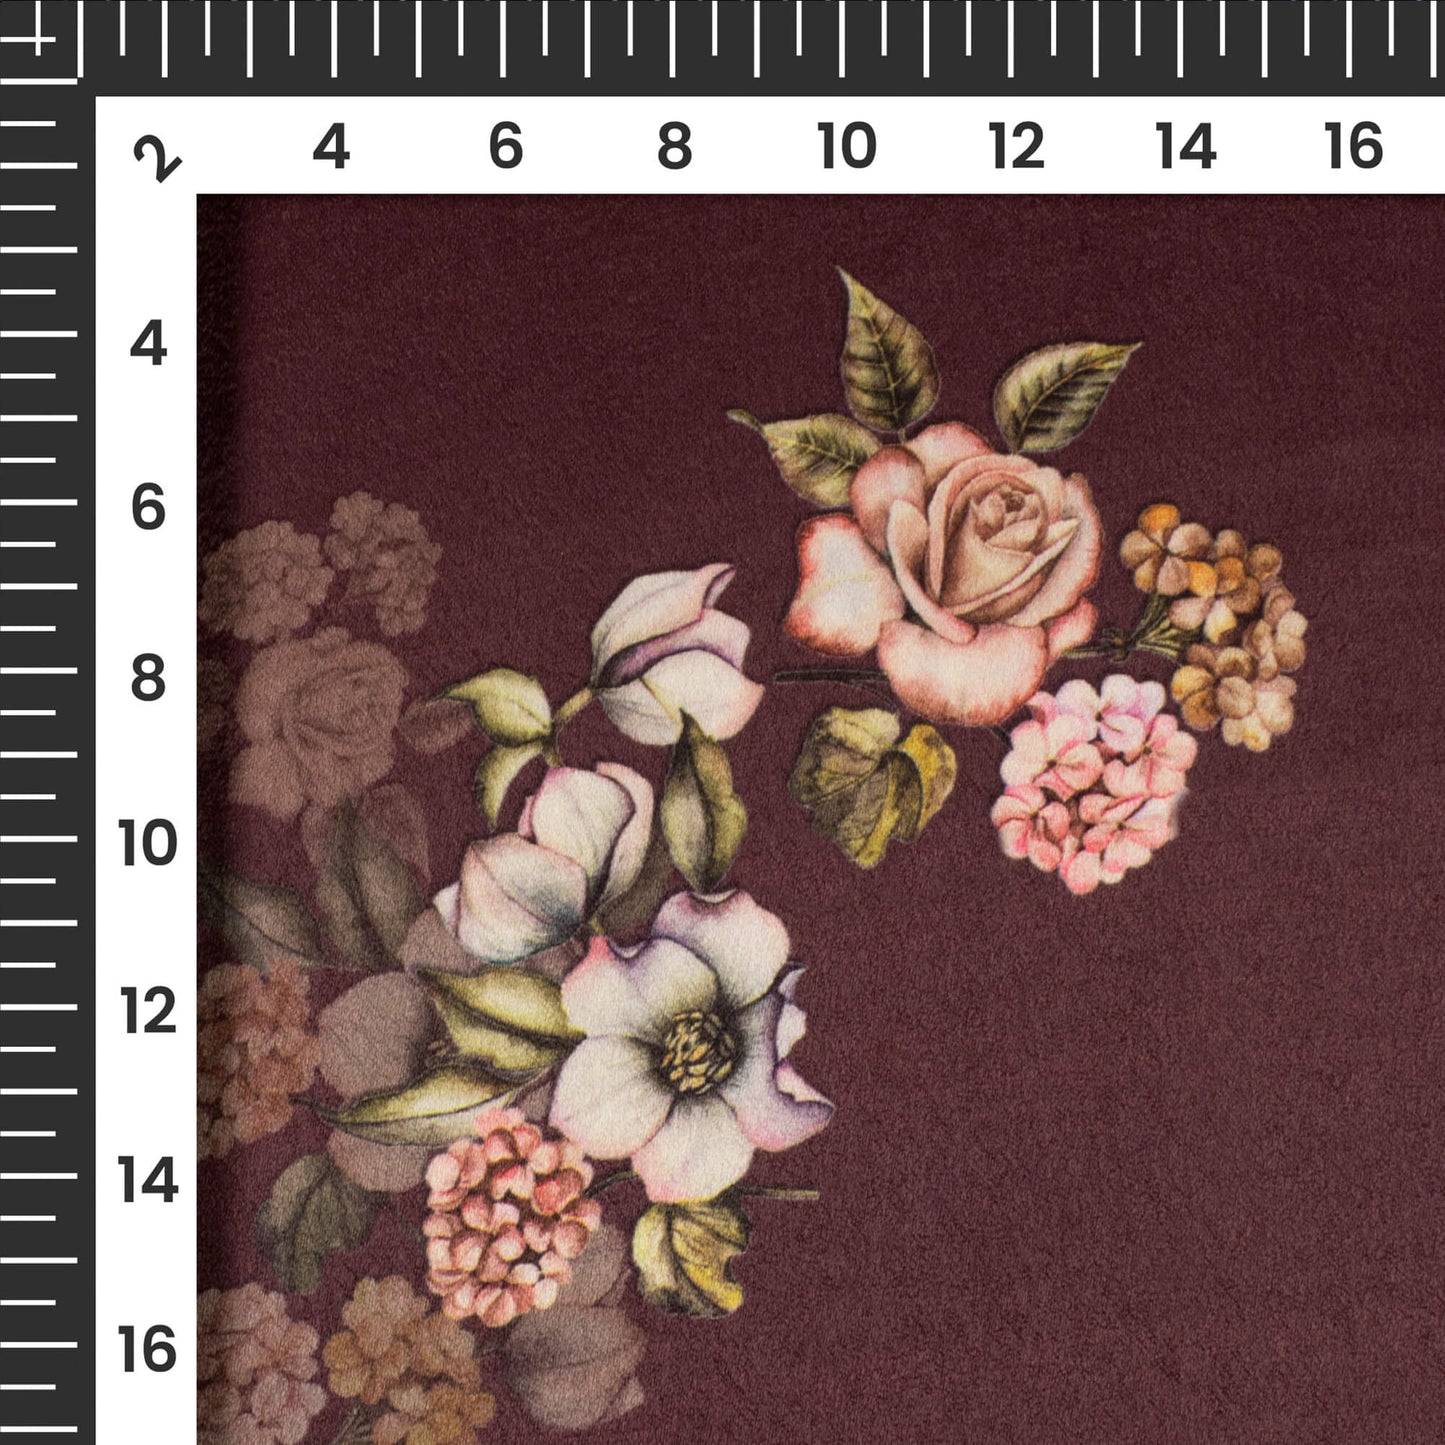 Chocolate Brown And Pink Floral Pattern Digital Print Premium Lush Satin Fabric